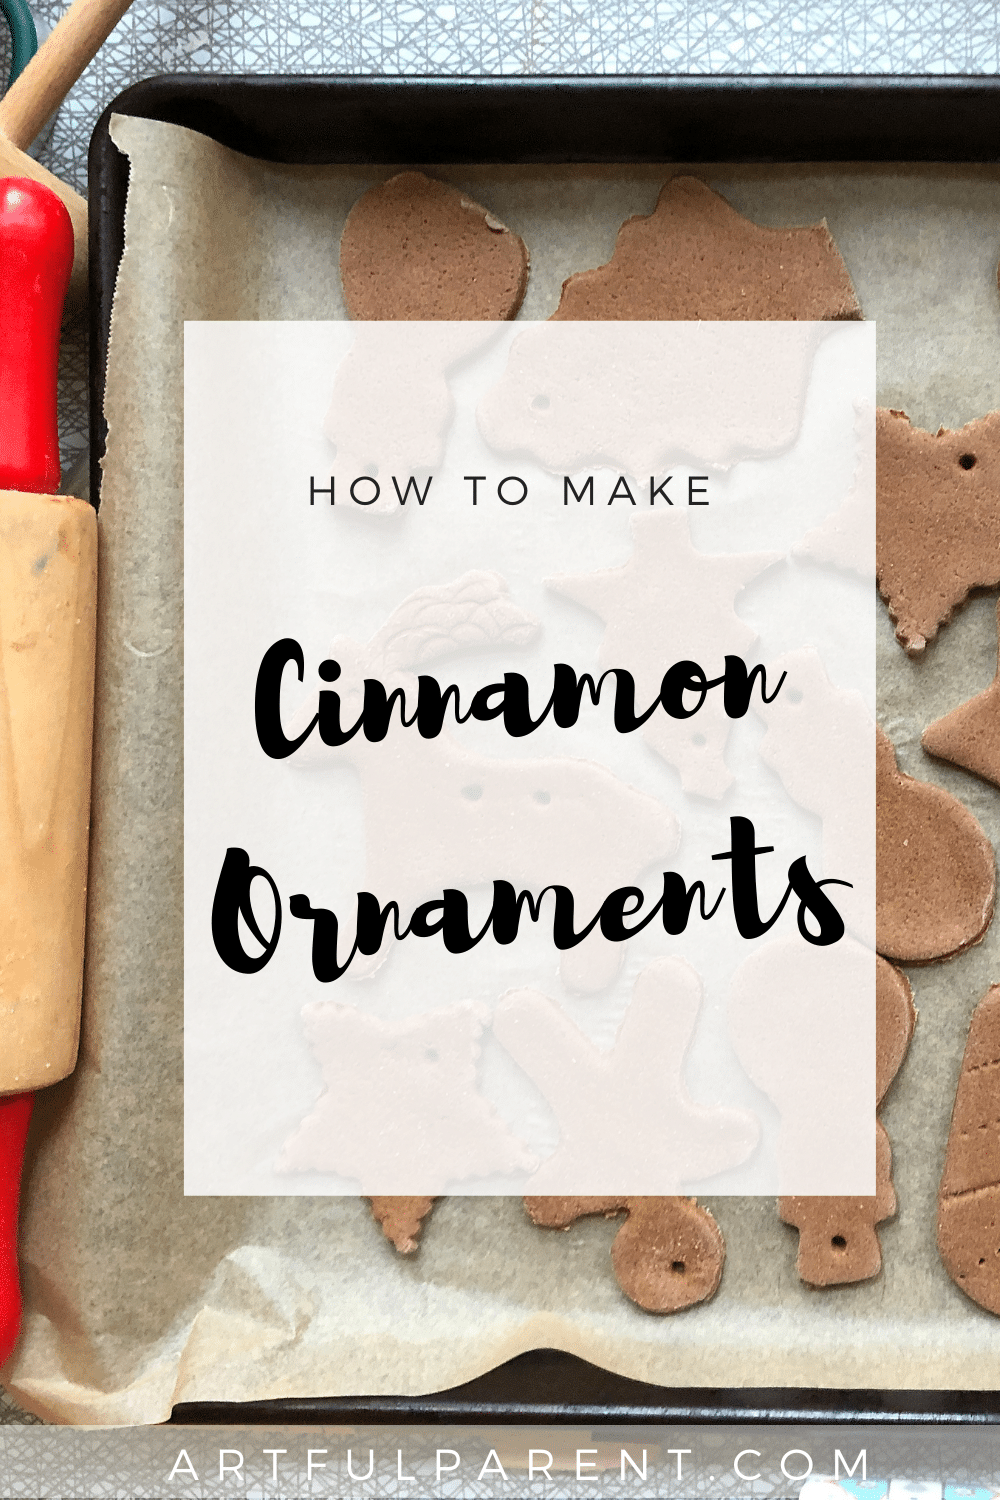 How to Make Homemade Cinnamon Ornaments